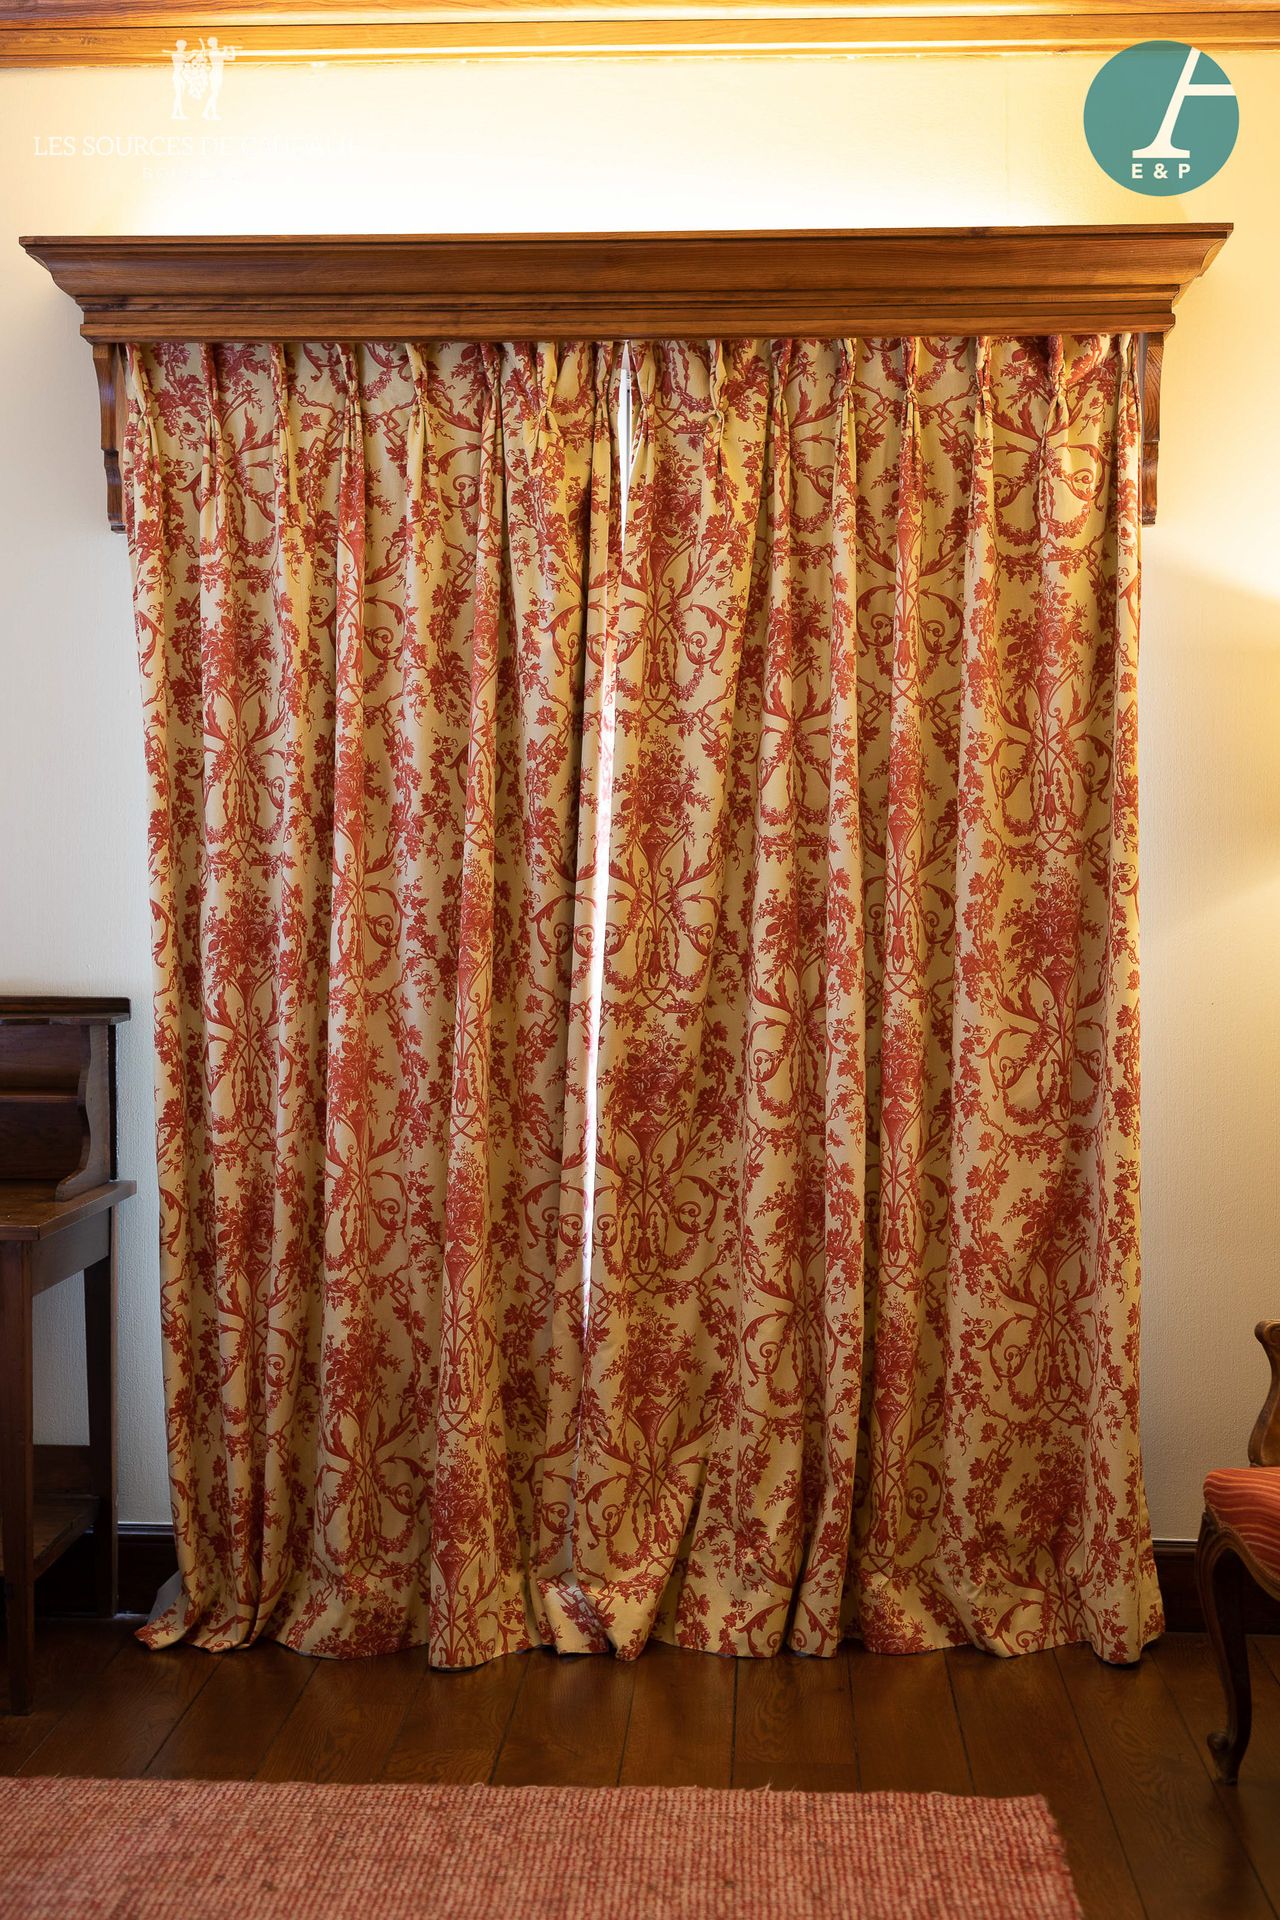 Null 来自8号房间 "Le Bouquet"。

拍品包括一副窗帘和一个百叶窗，有遮光衬里。

高：250厘米 - 宽：100厘米（2）。